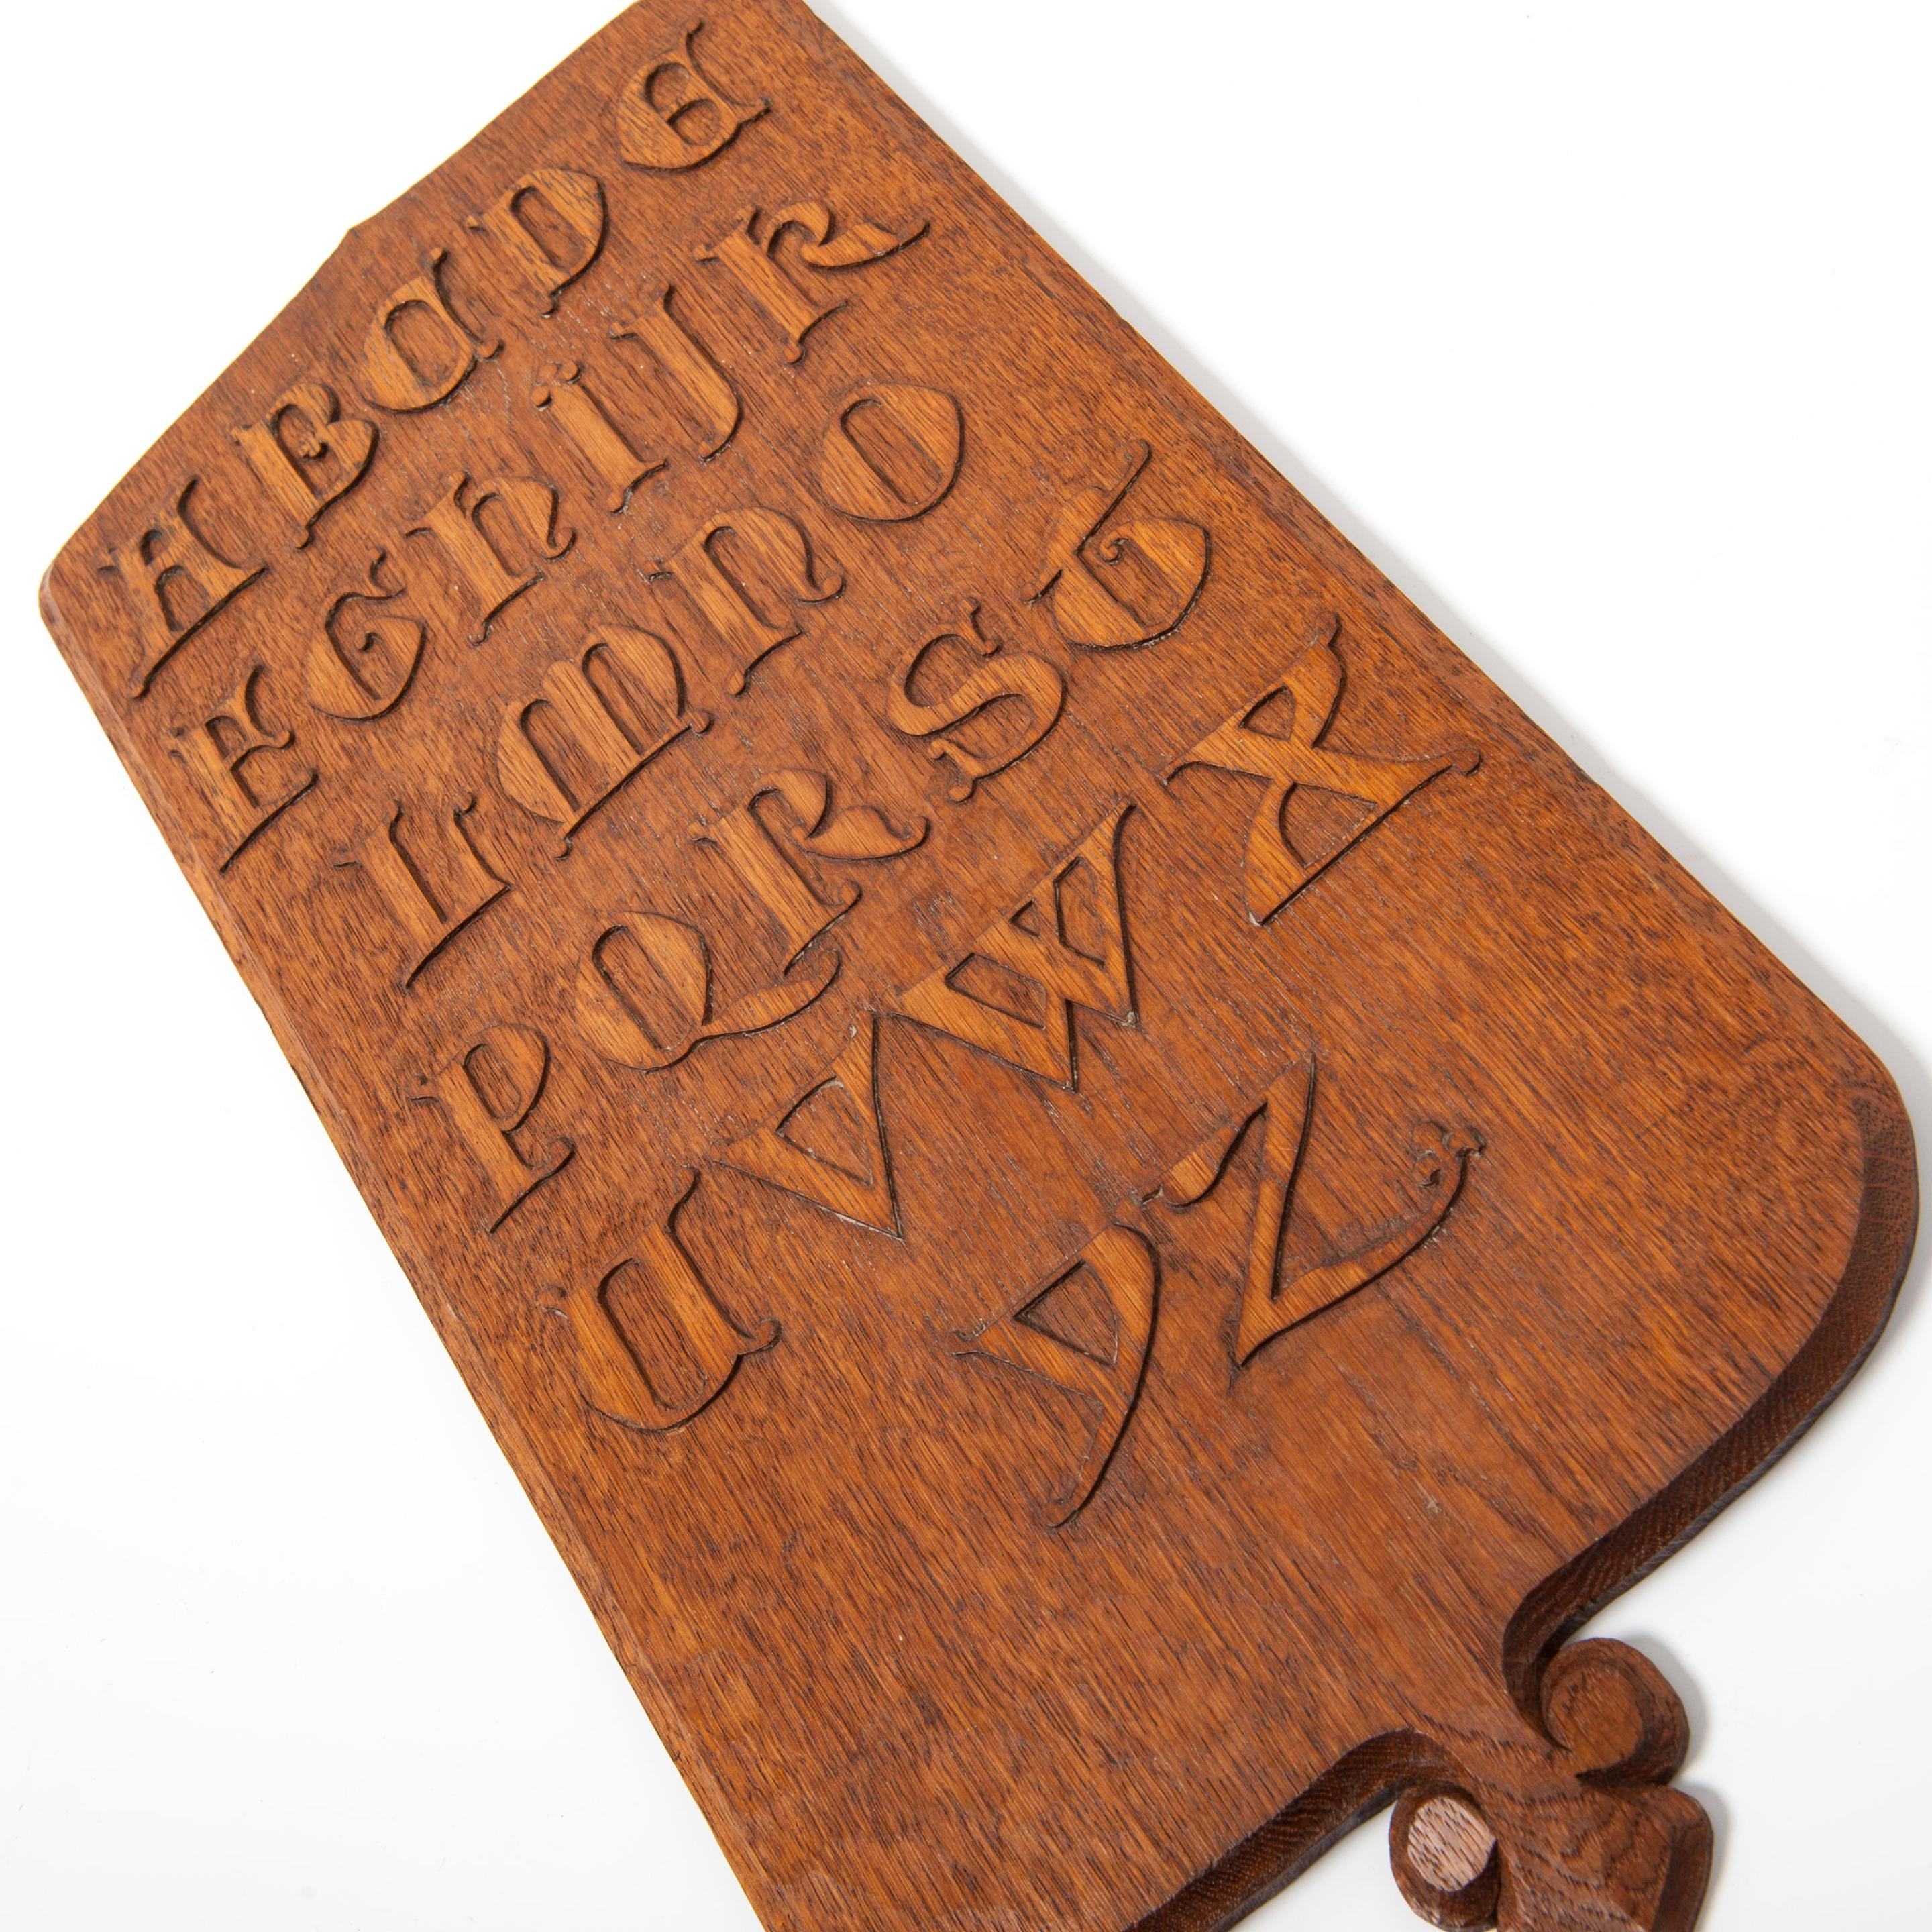 Ref: 125292
Carved oak alphabet spelling board - a school teaching aid
England circa 1880
Measurements: H: 52cm (20.5